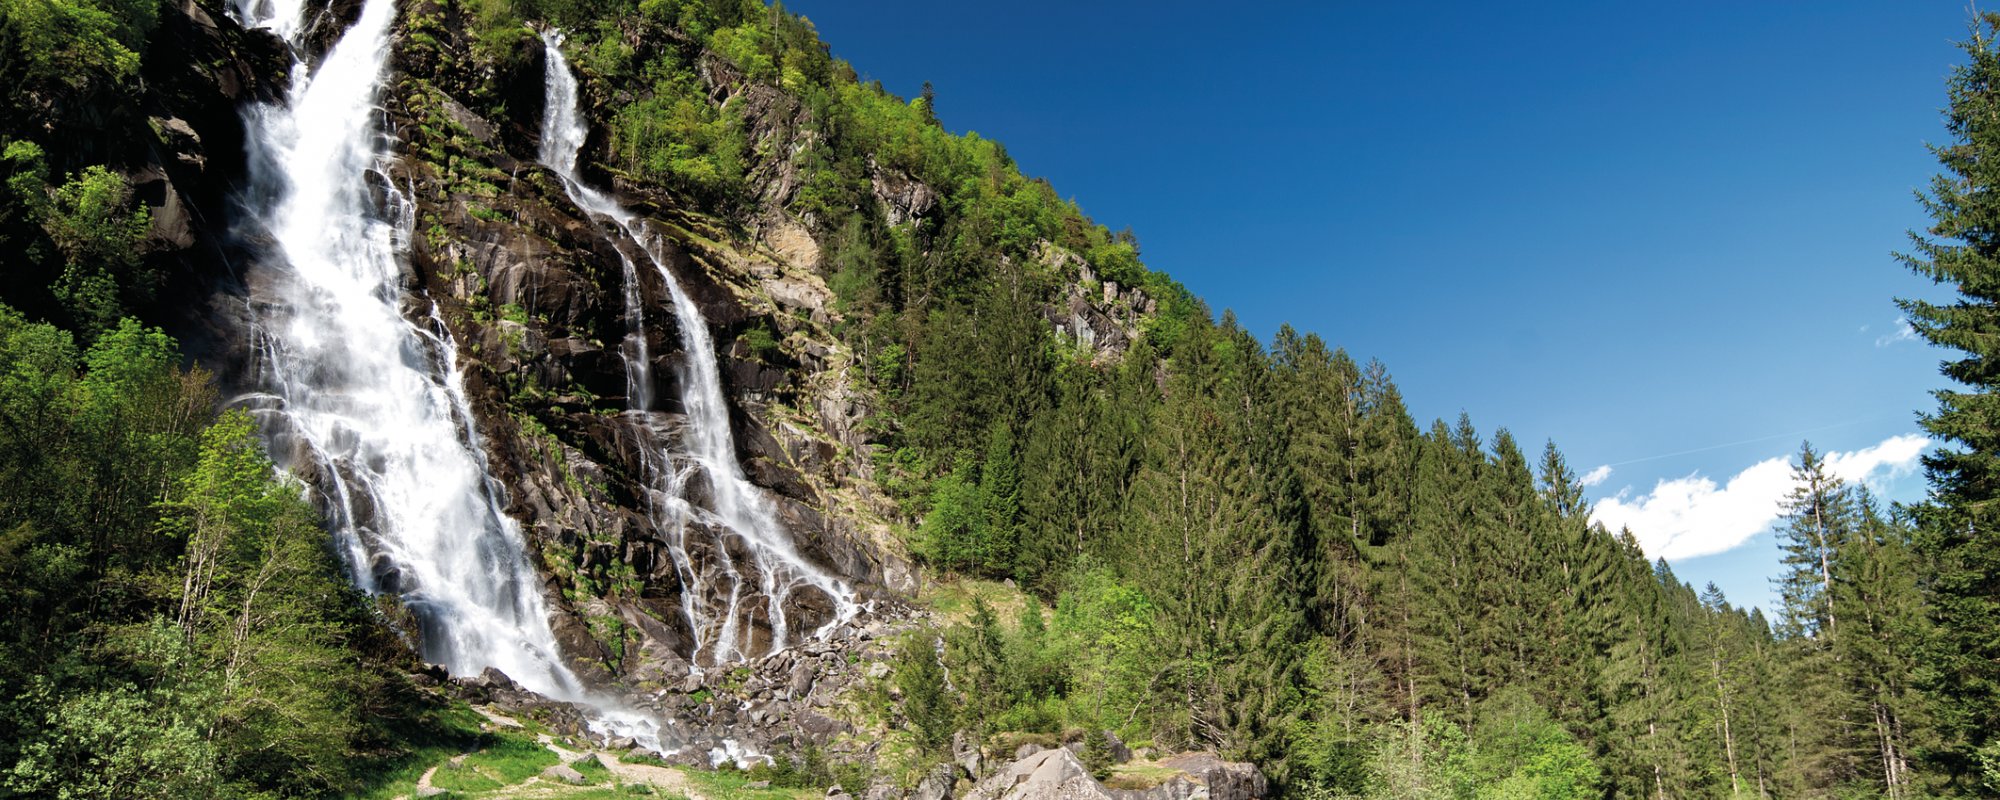 Cascate Nardis - Nardis-Wasserfall